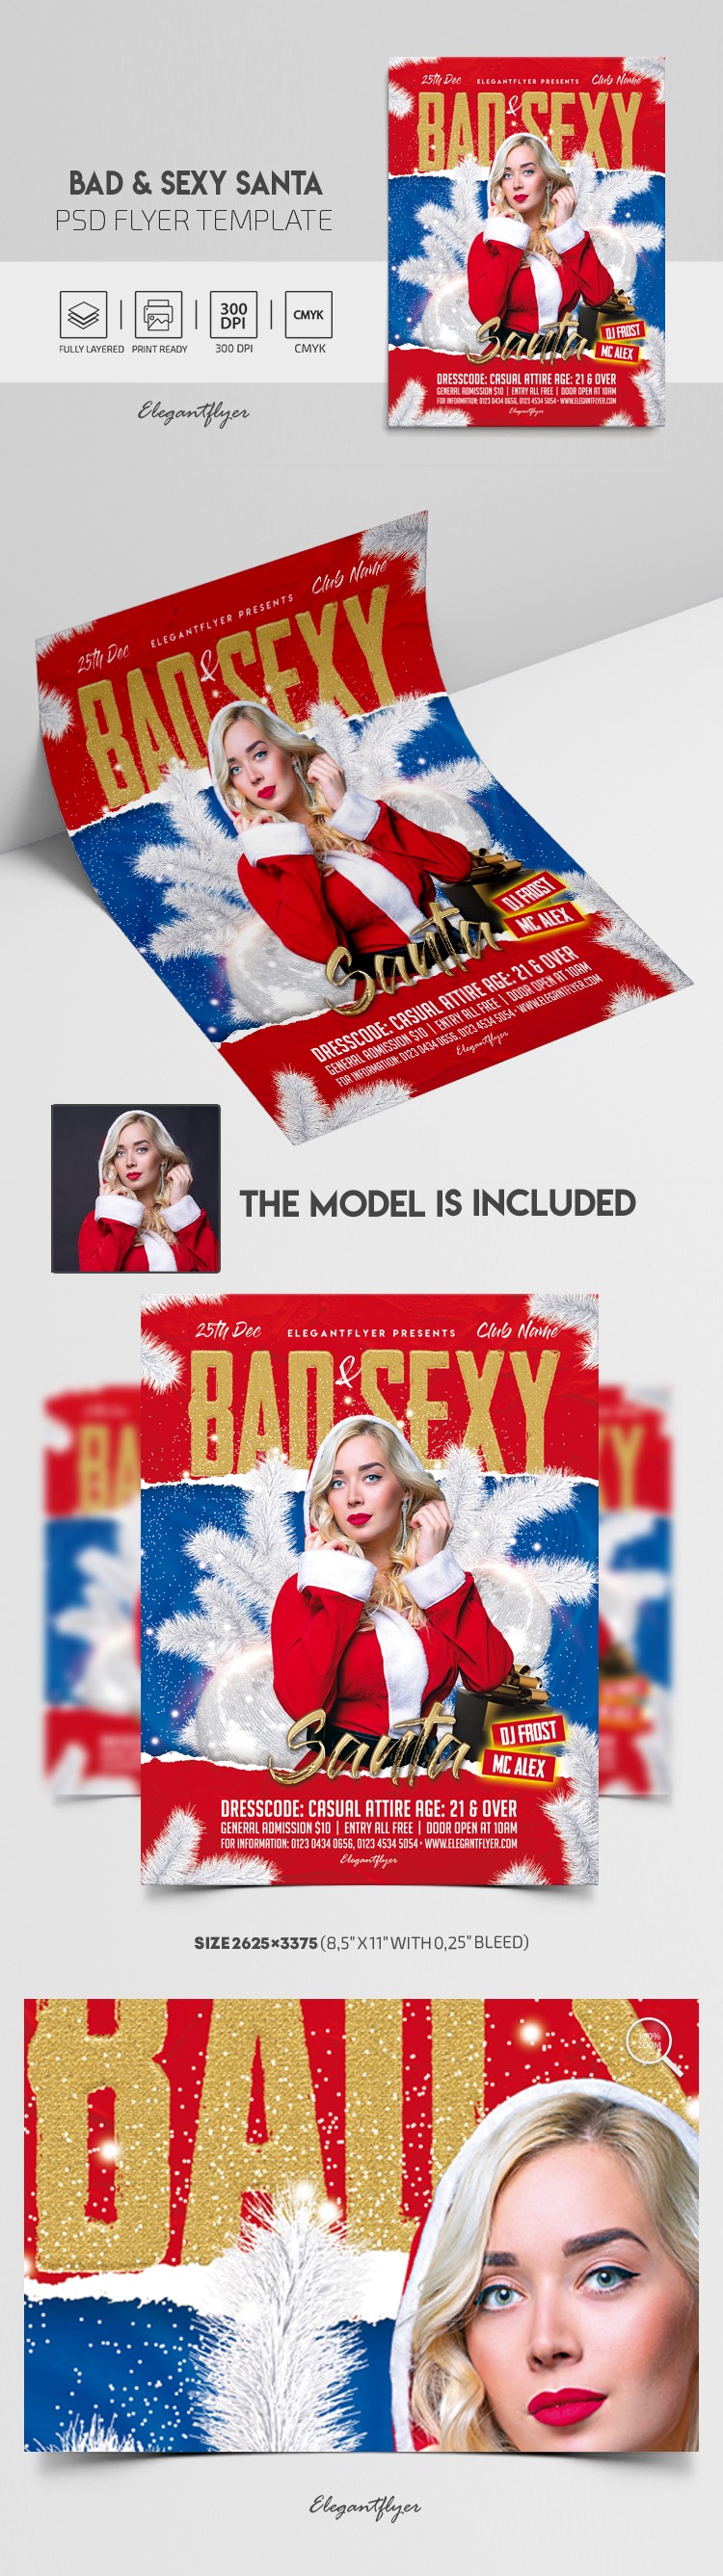 Bad & Sexy Santa Flyer by ElegantFlyer